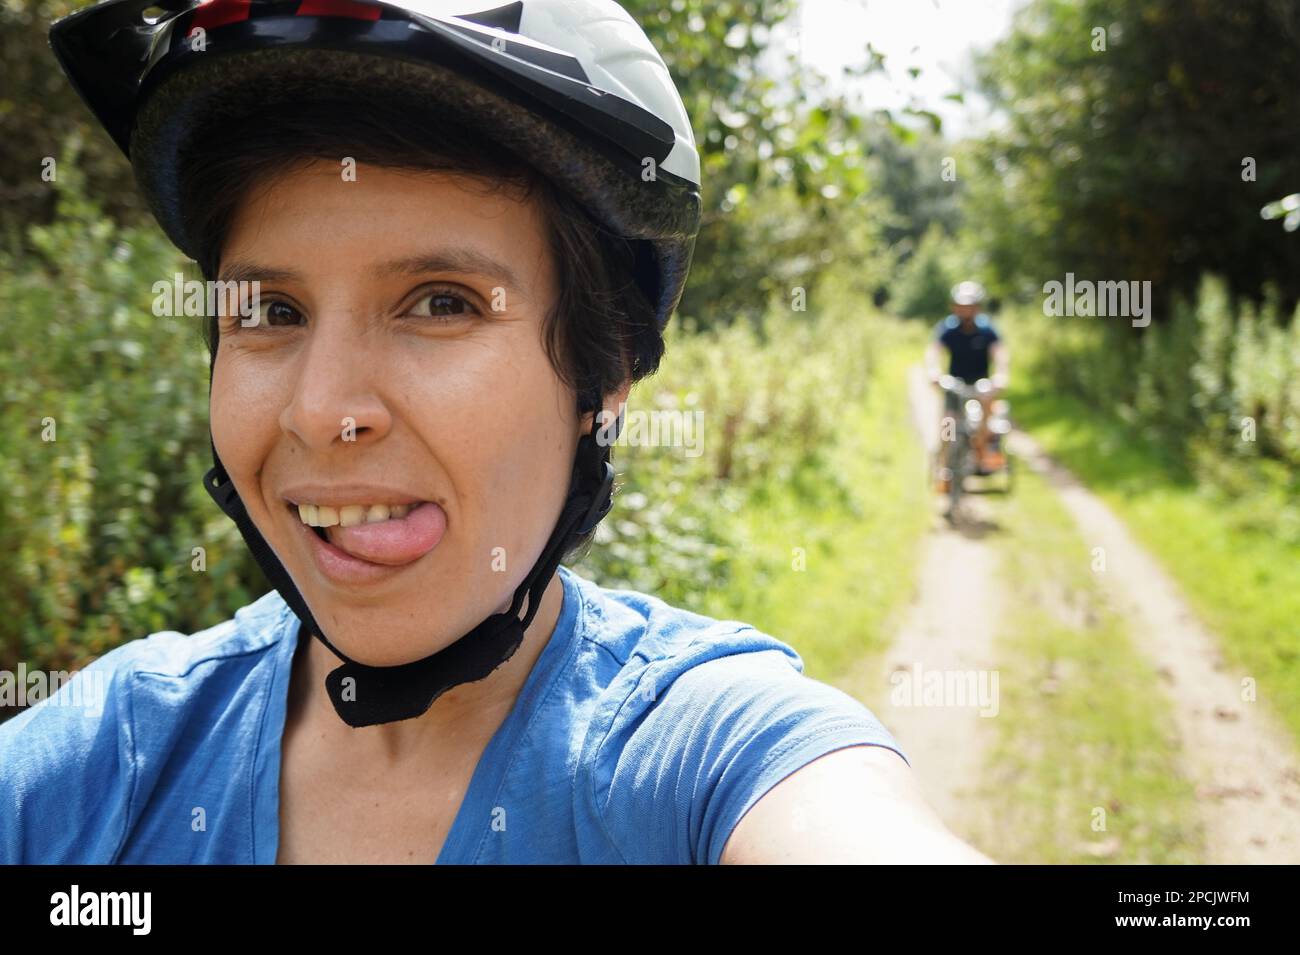 Girl having fun riding a bike Stock Photo